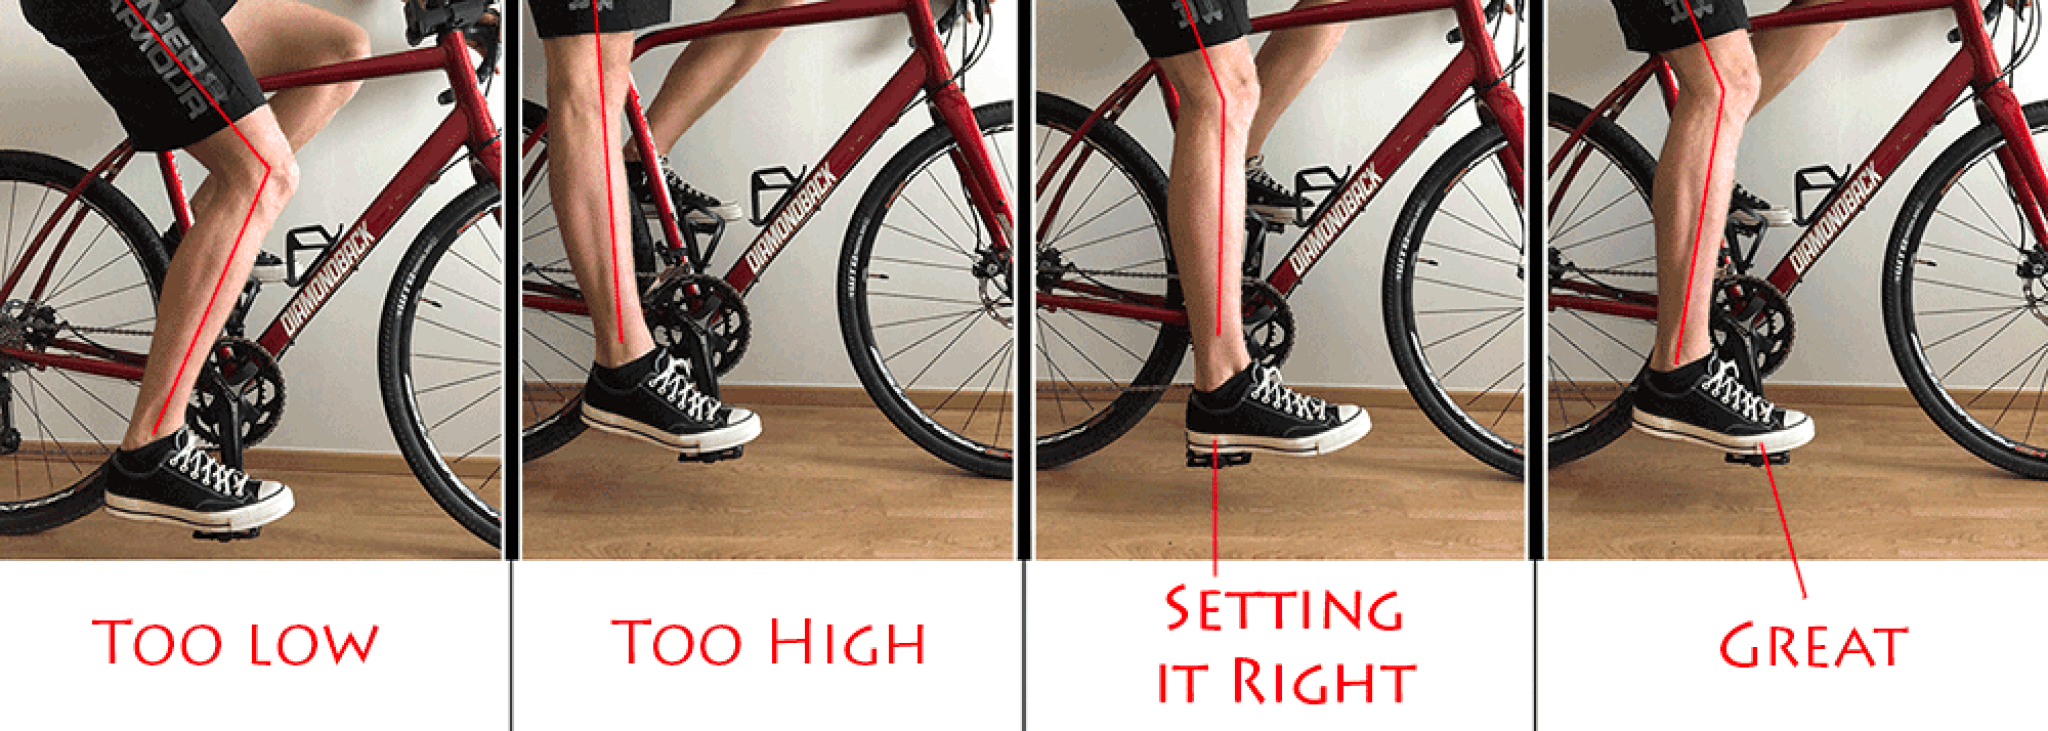 How to Set a Correct Bike Seat Height